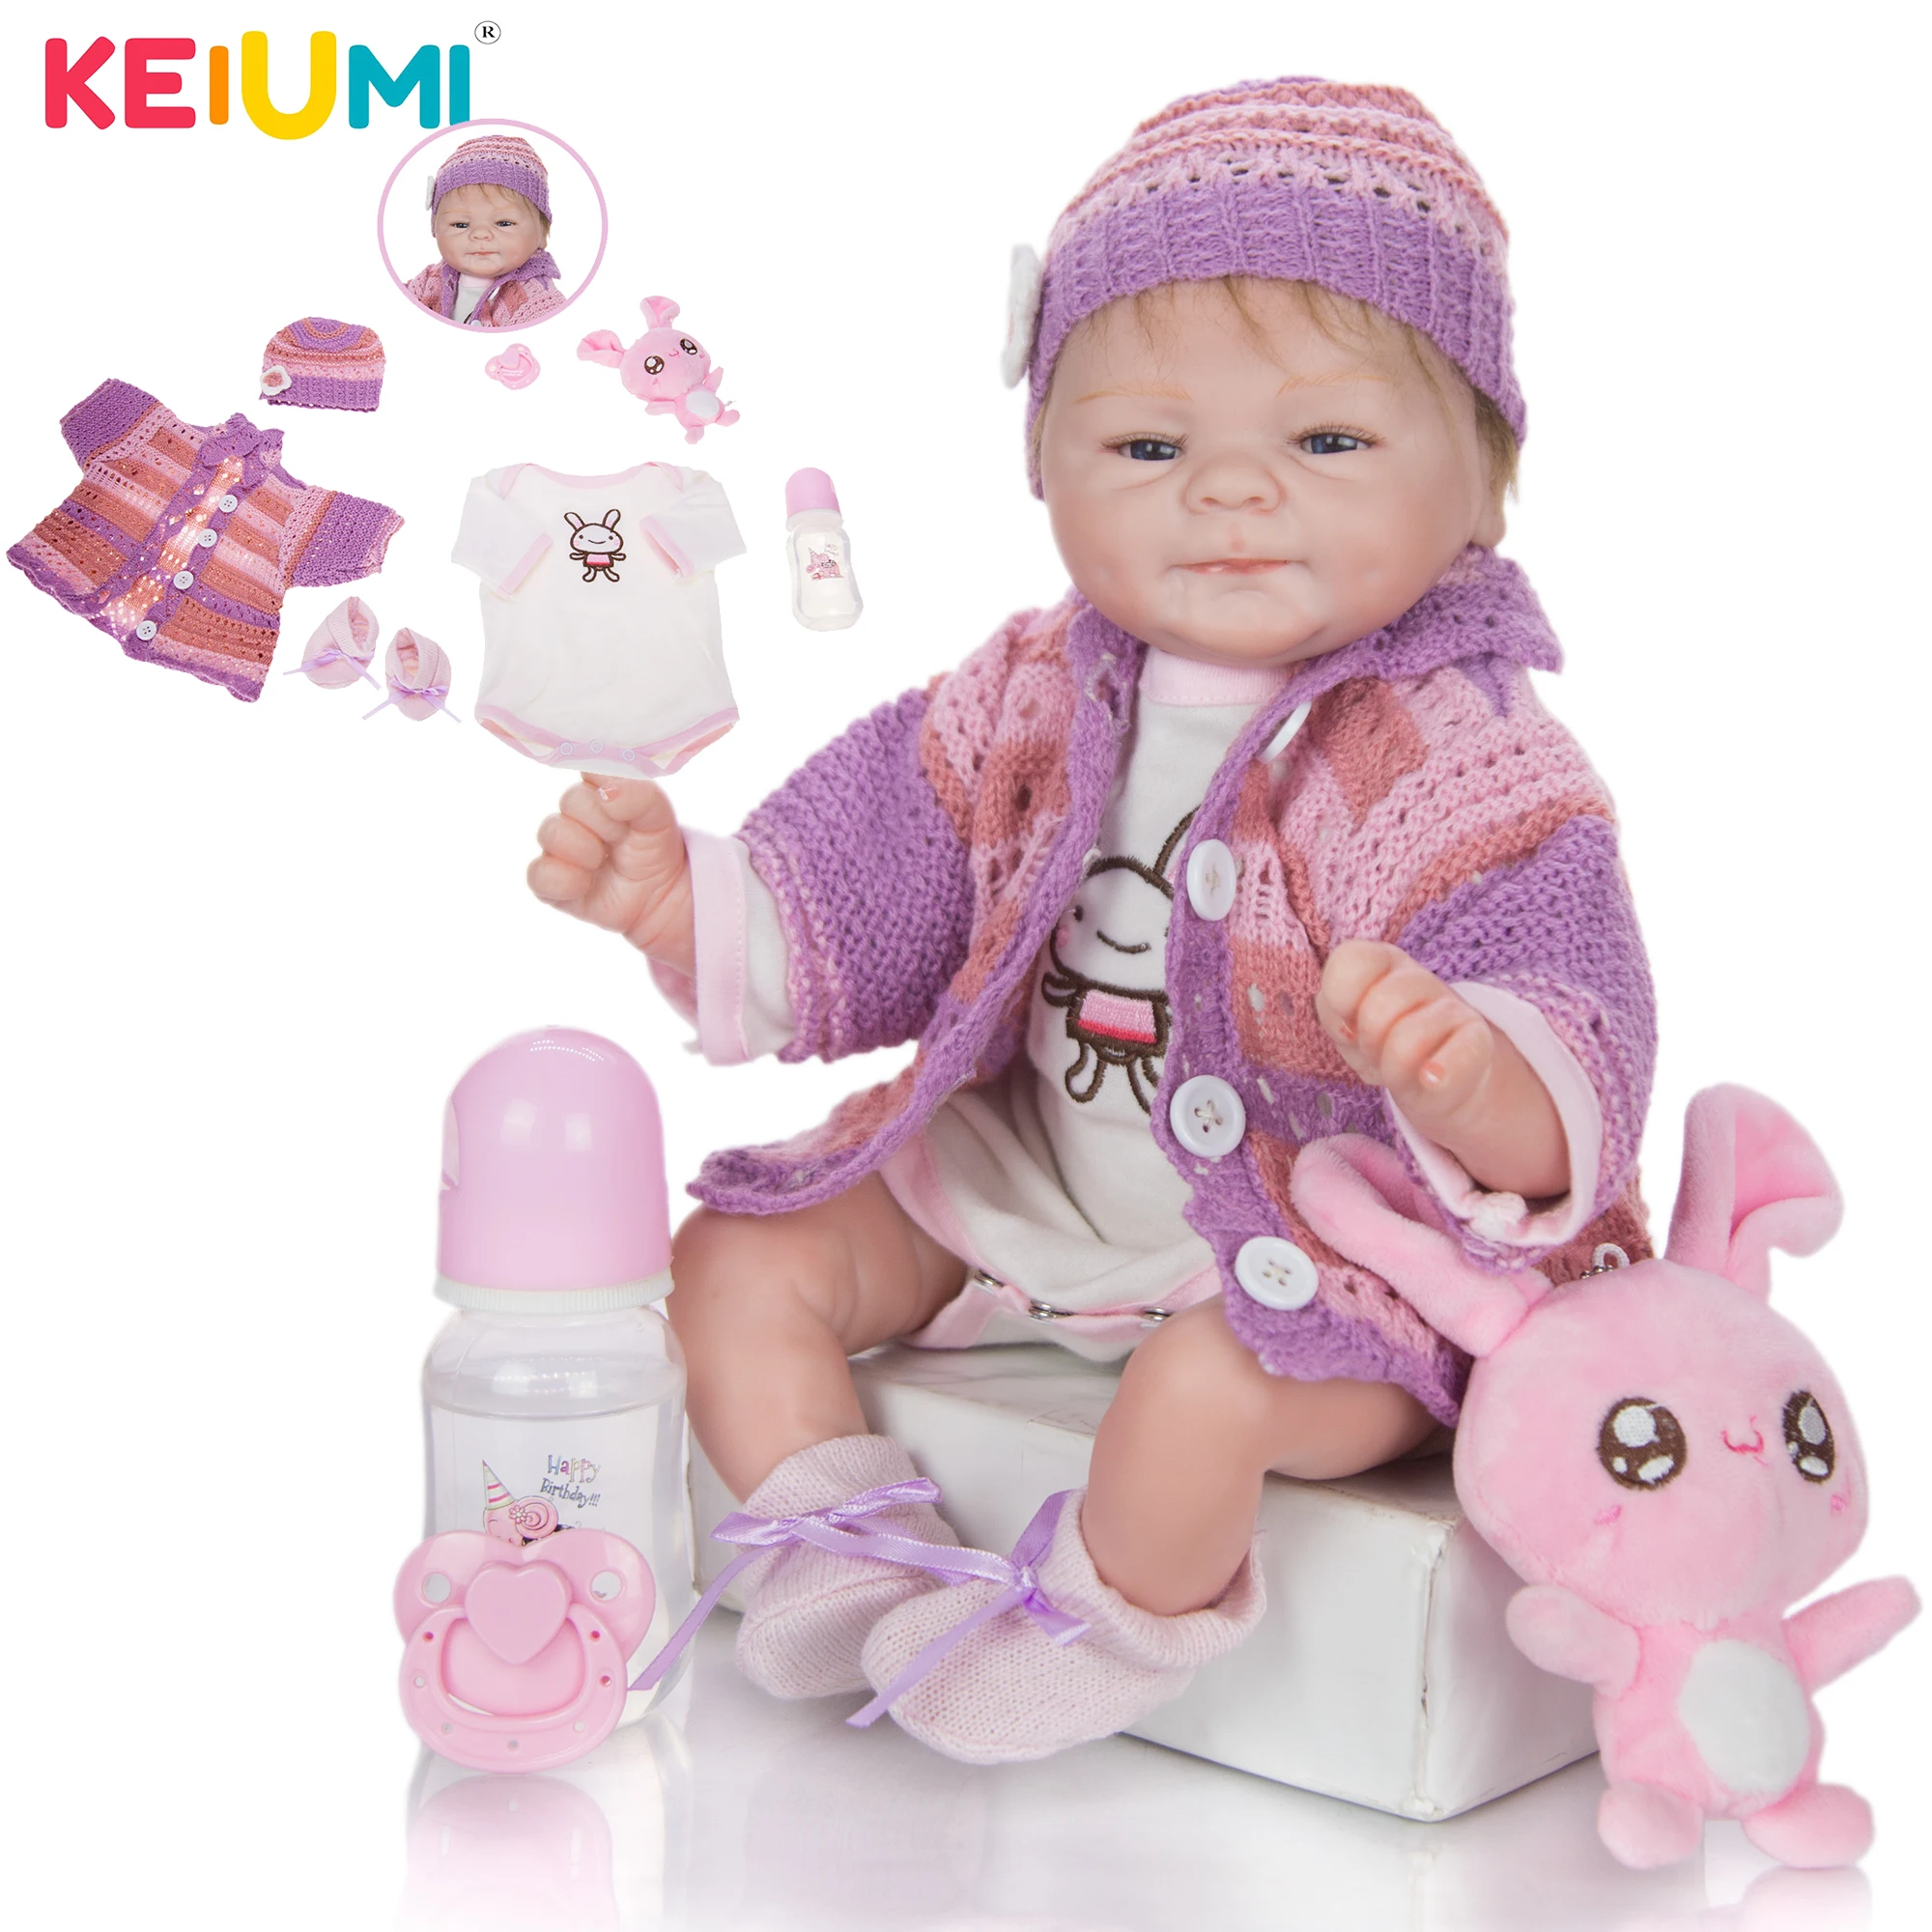 

17 "KEIUMI Soft Silicone Babies Reborn Dolls Lifelike Baby Doll Stuffed 42 CM Baby Toy Girls For Kids Playmates Birthday Gifts